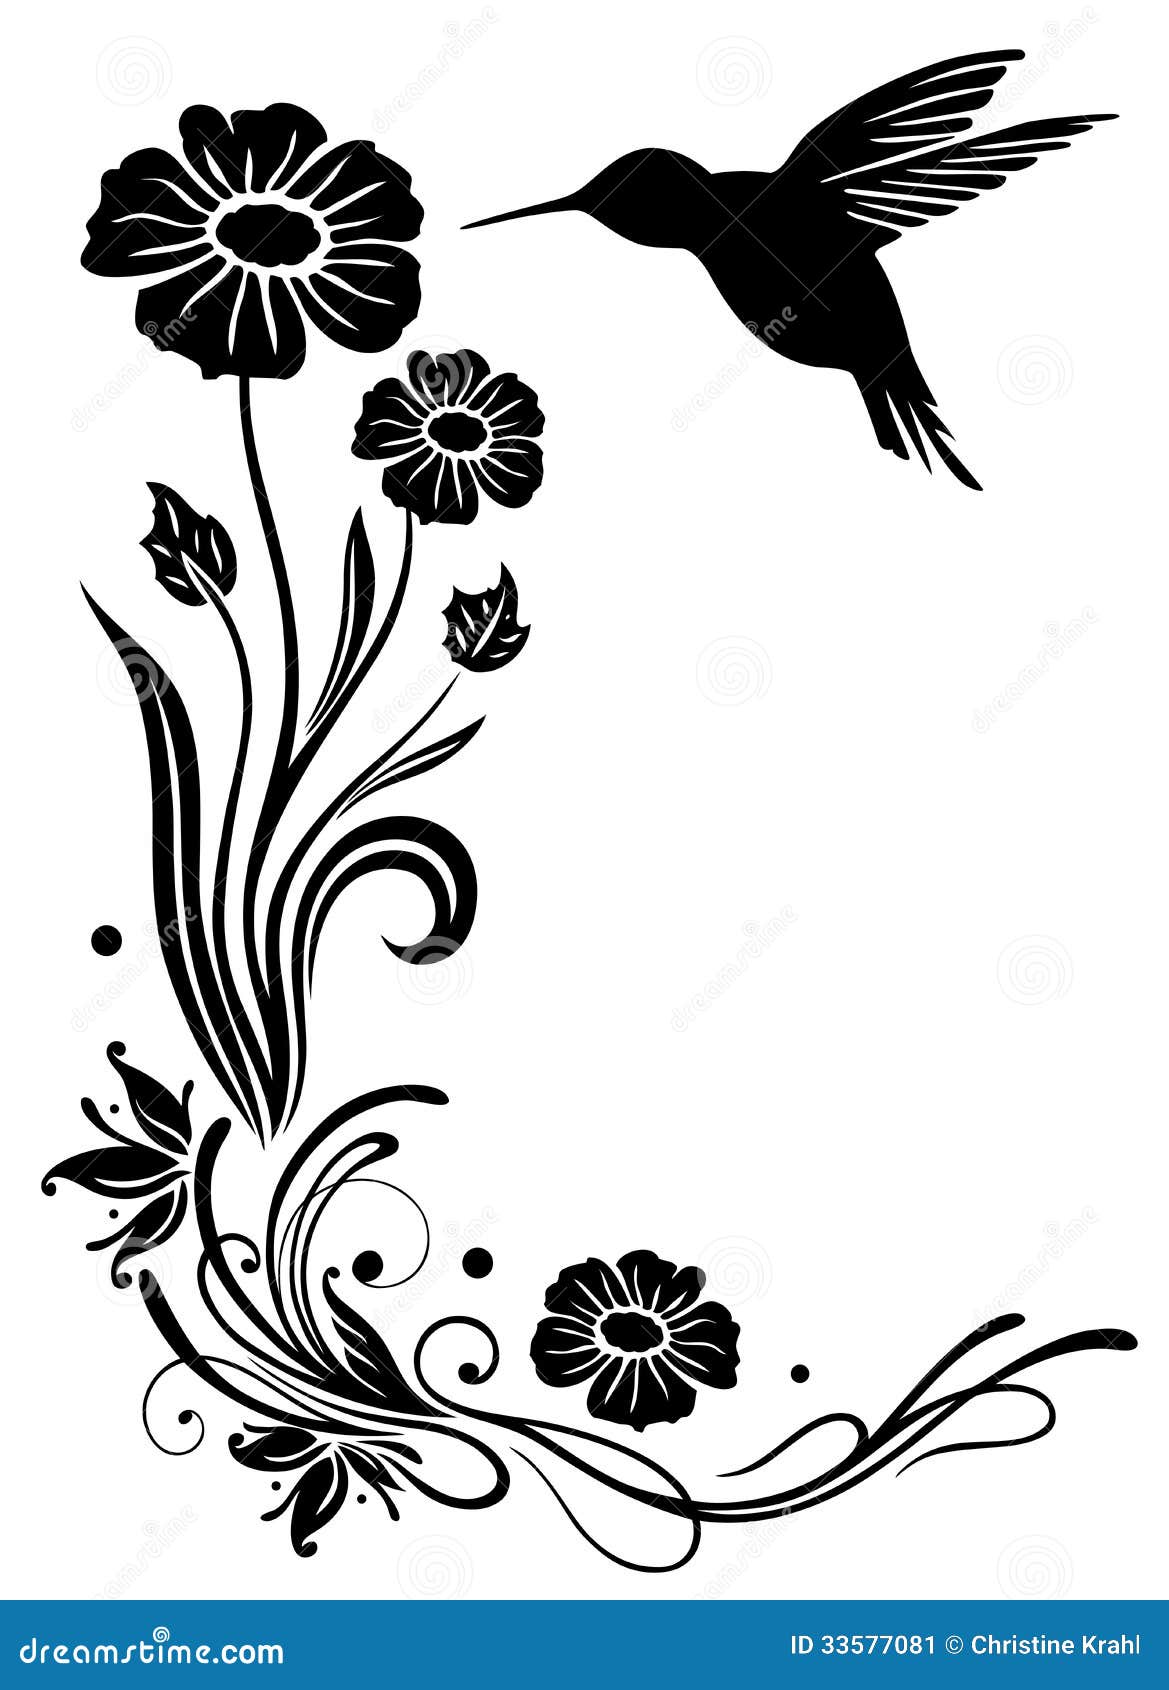 free hummingbird clipart black and white - photo #18